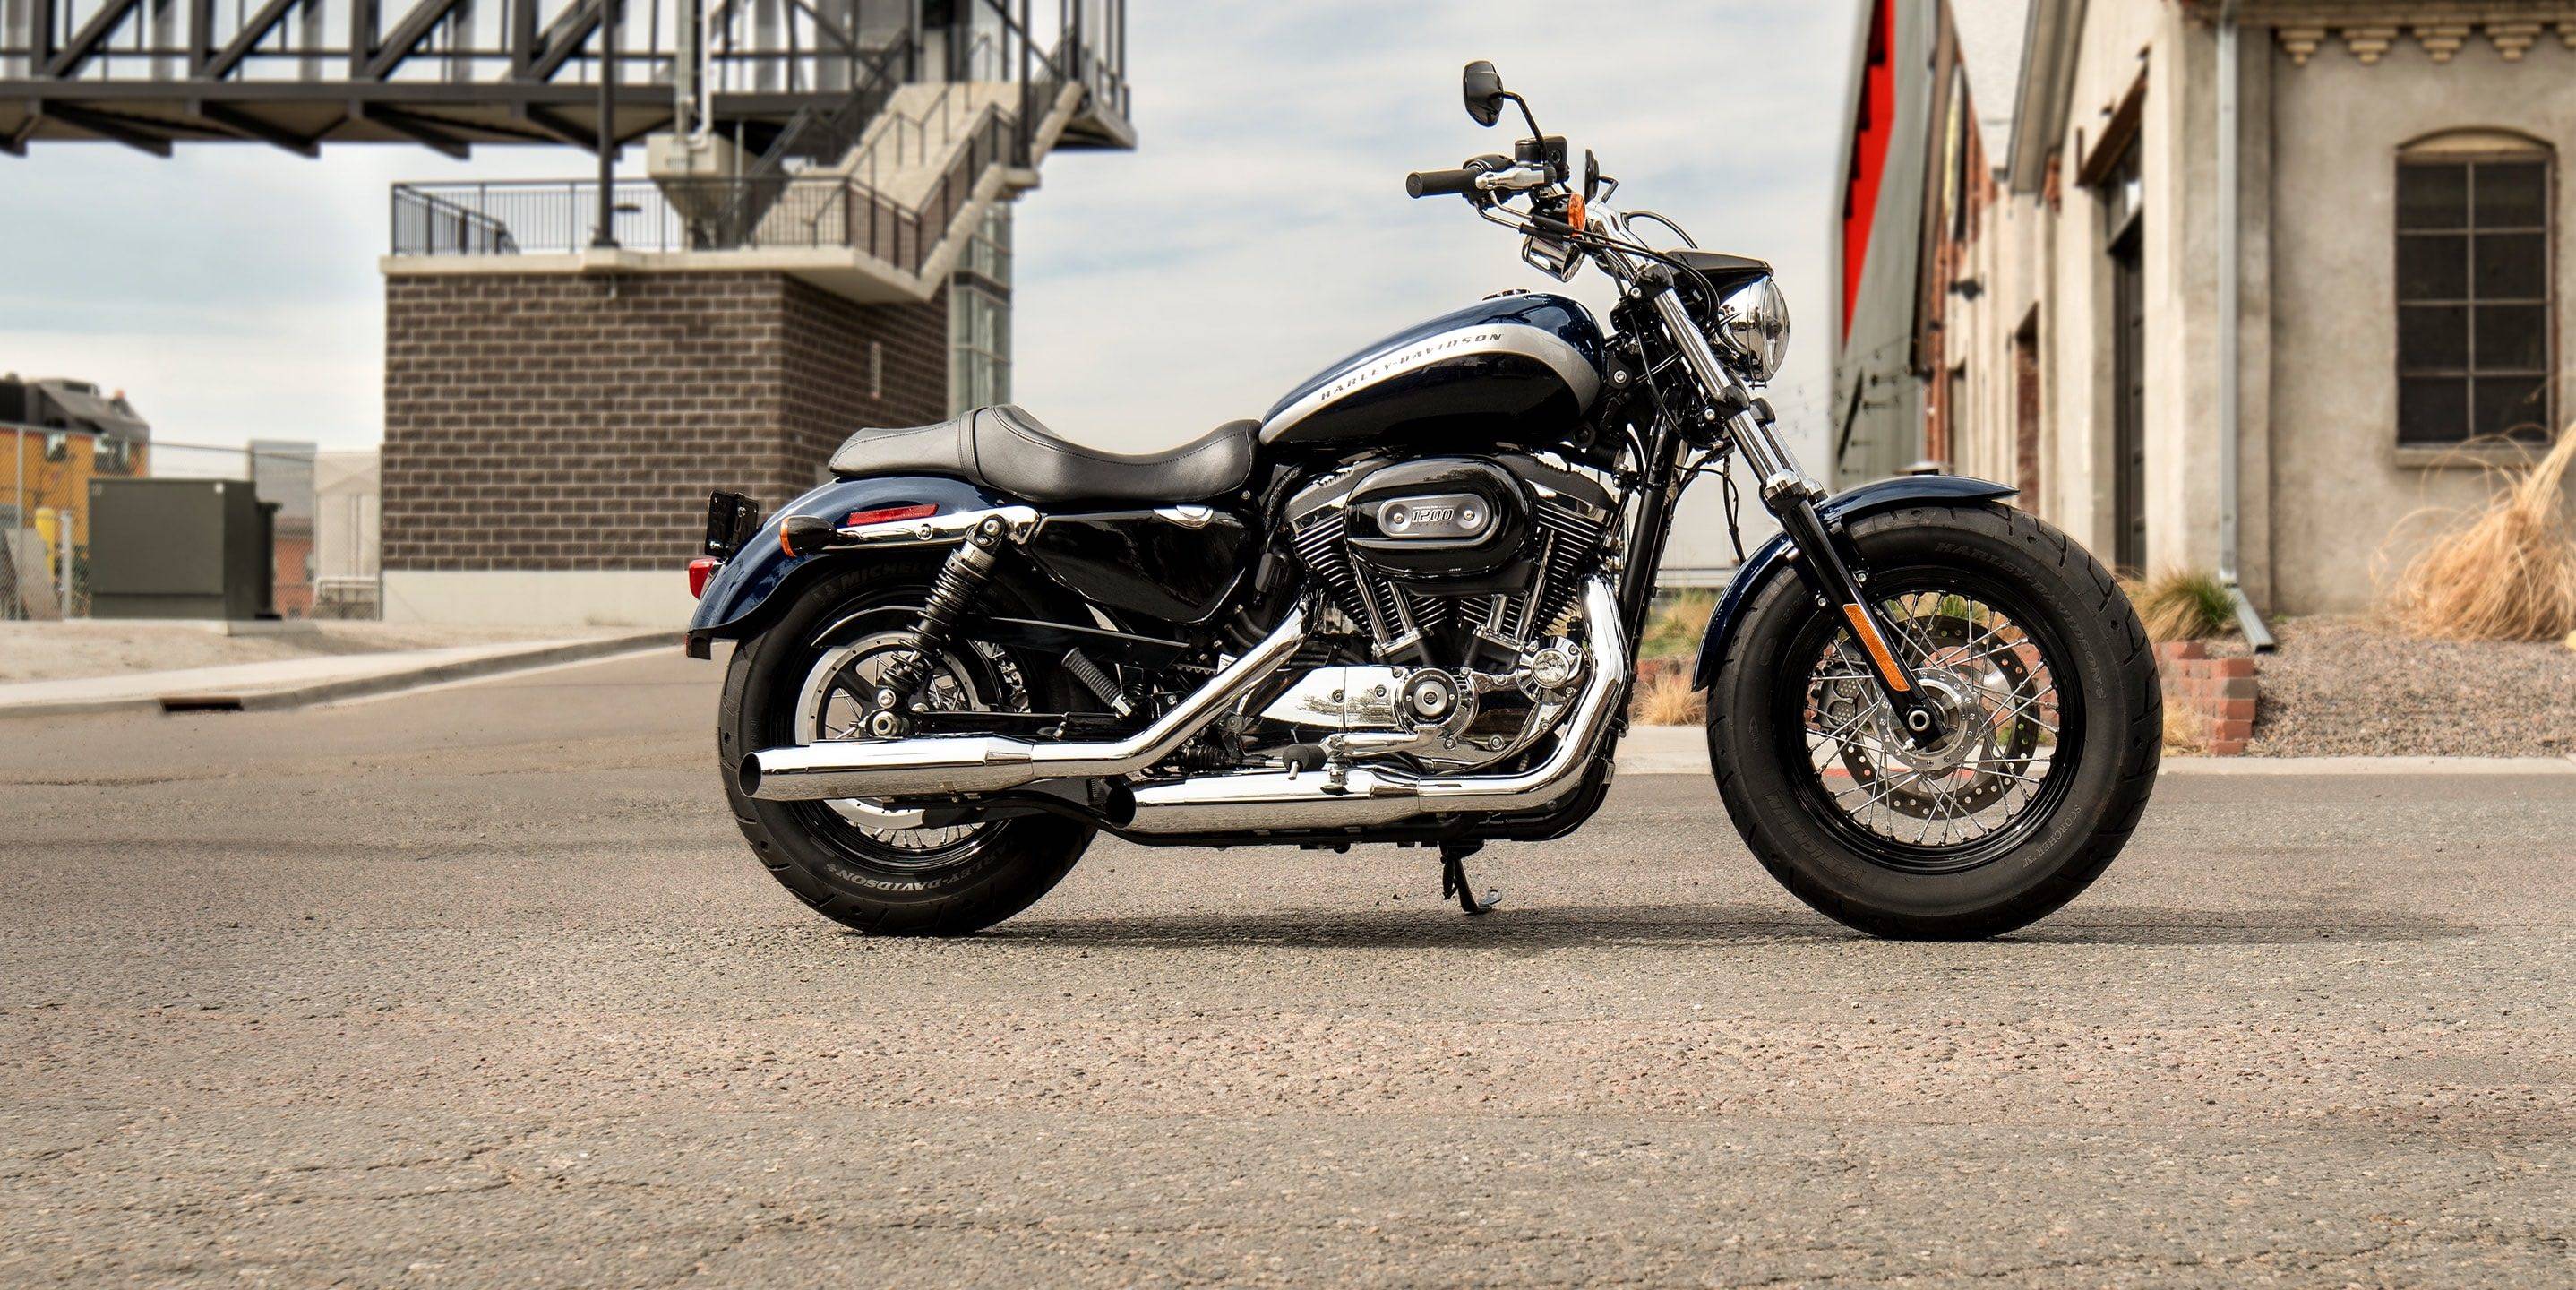 Harley-Davidson Sportster 1200 